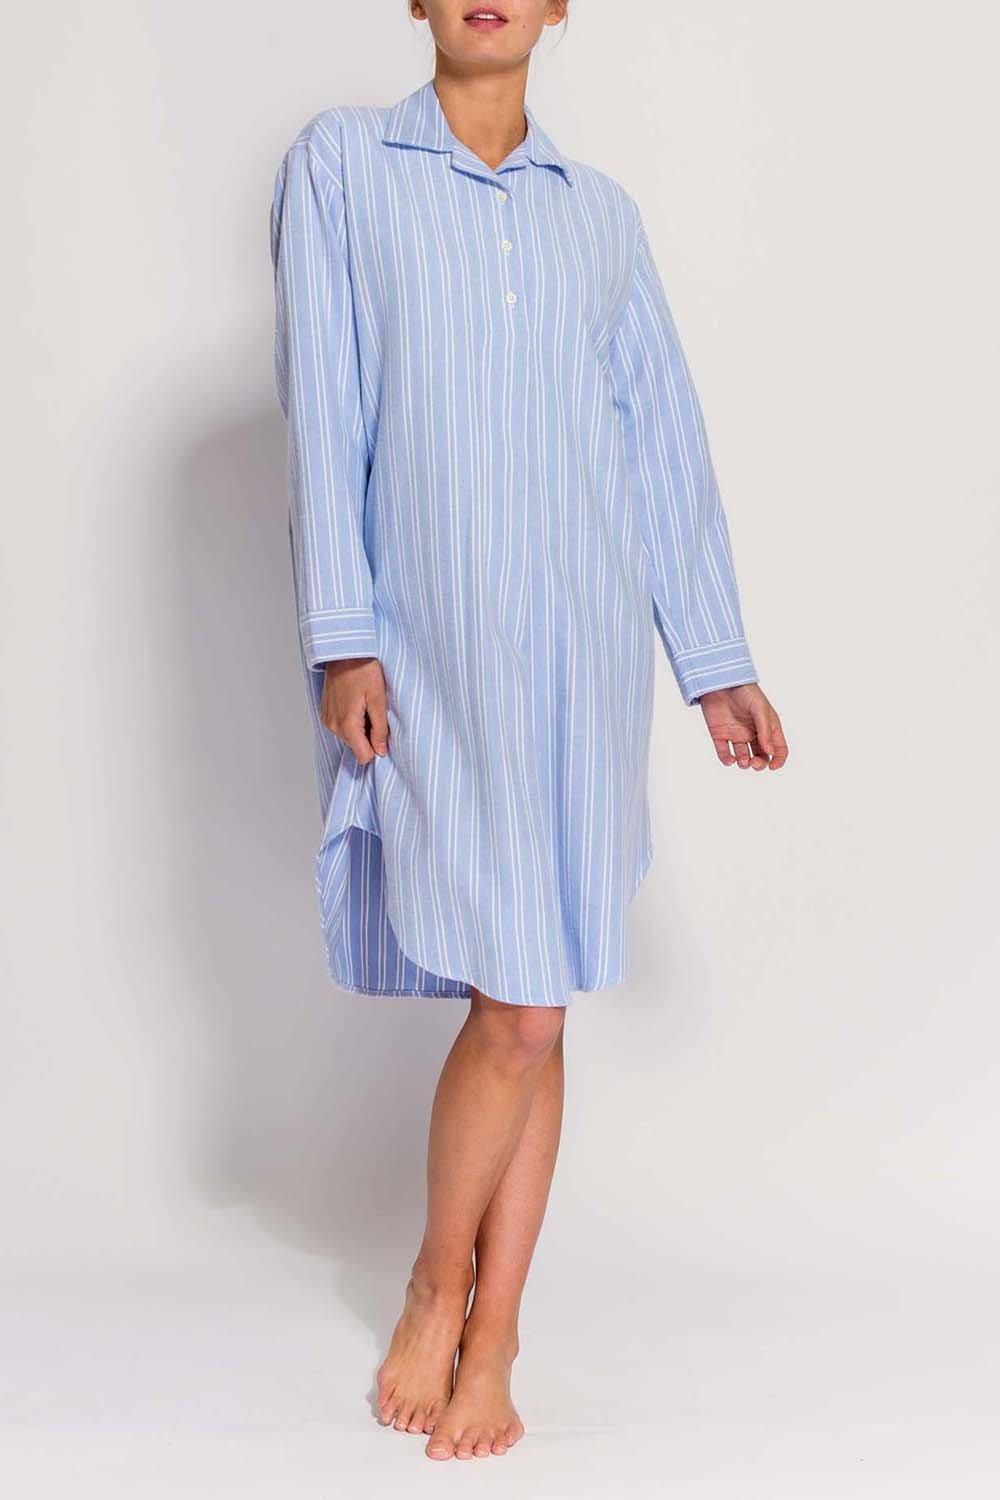 'Westwood' Blue Stripe Brushed Cotton Nightshirt